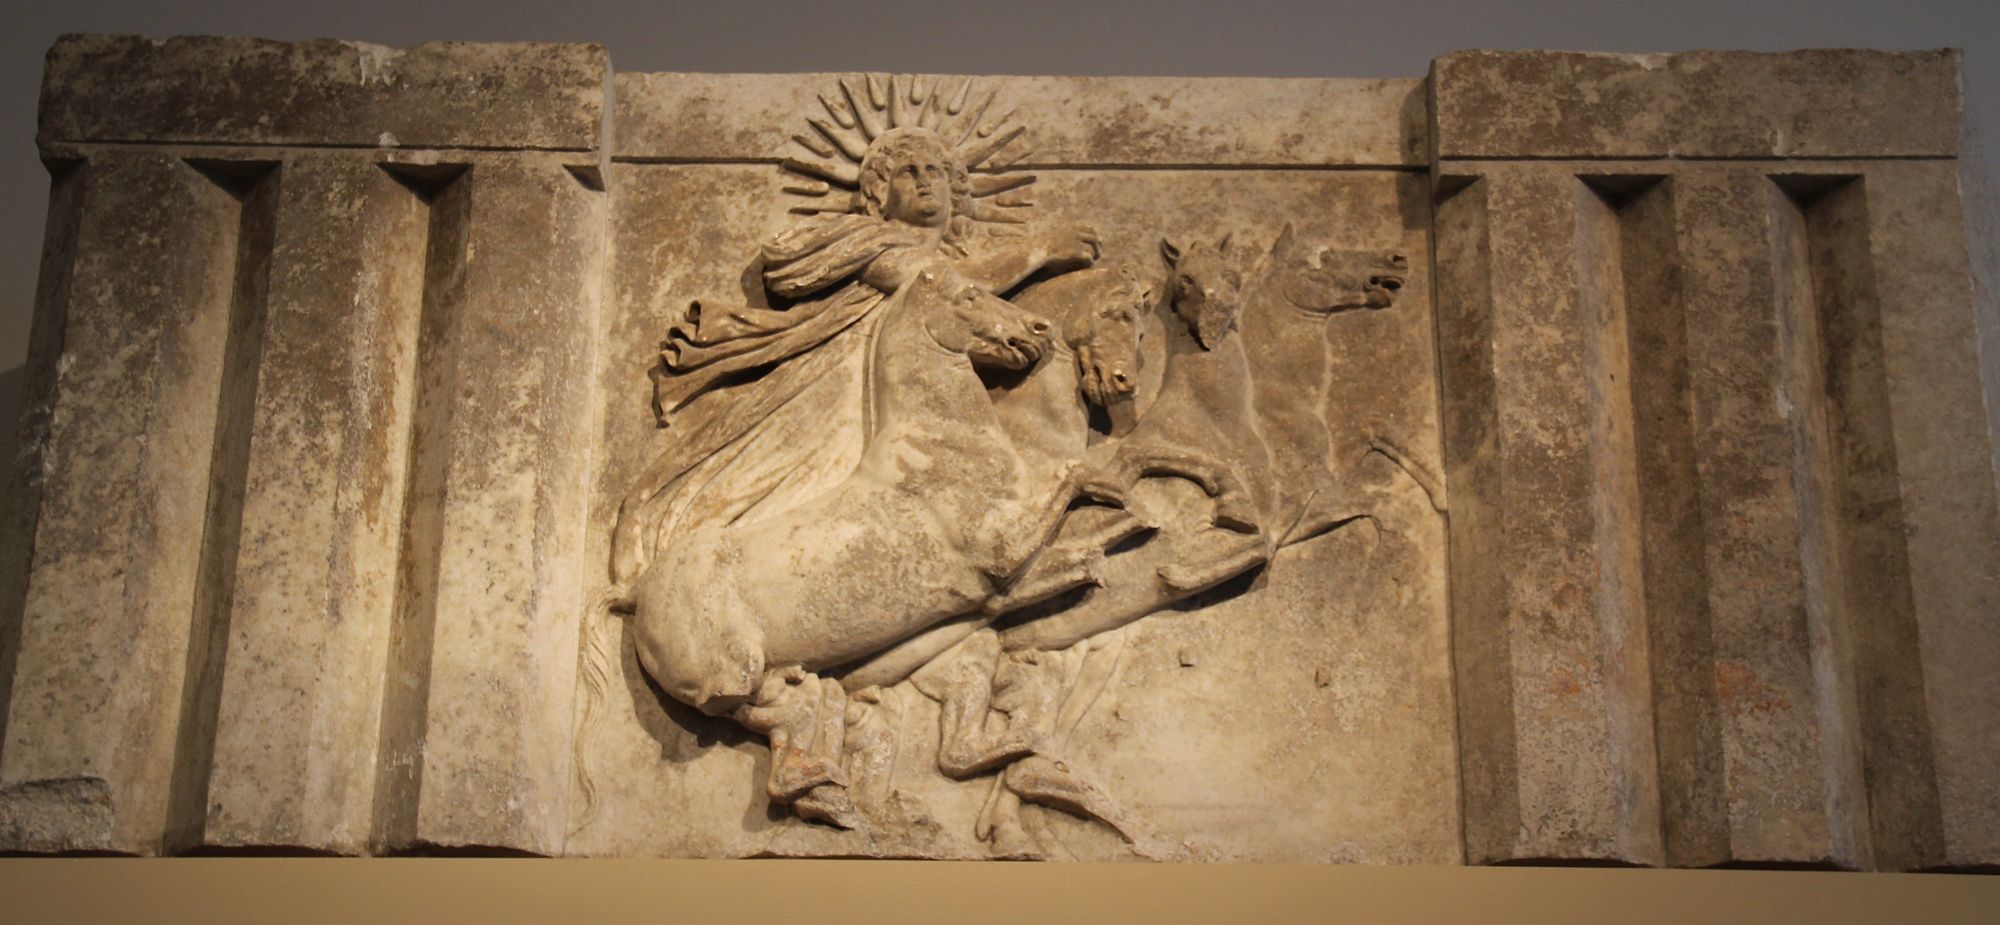 theia greek mythology